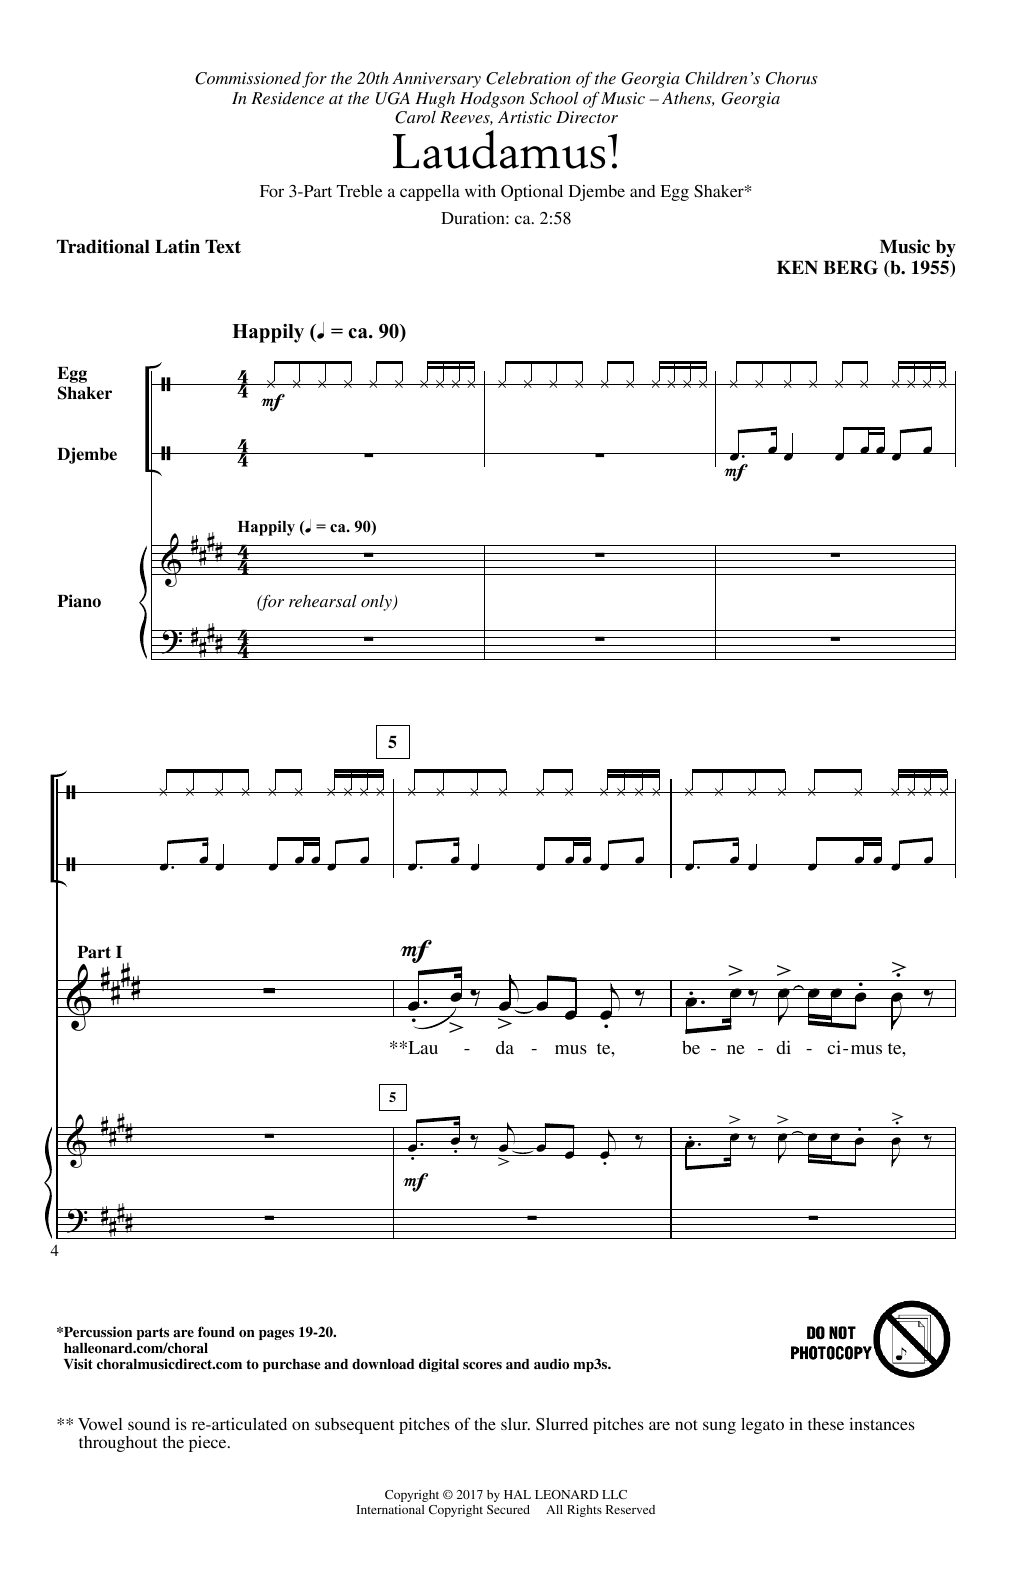 Ken Berg Laudamus! Sheet Music Notes & Chords for 3-Part Treble - Download or Print PDF